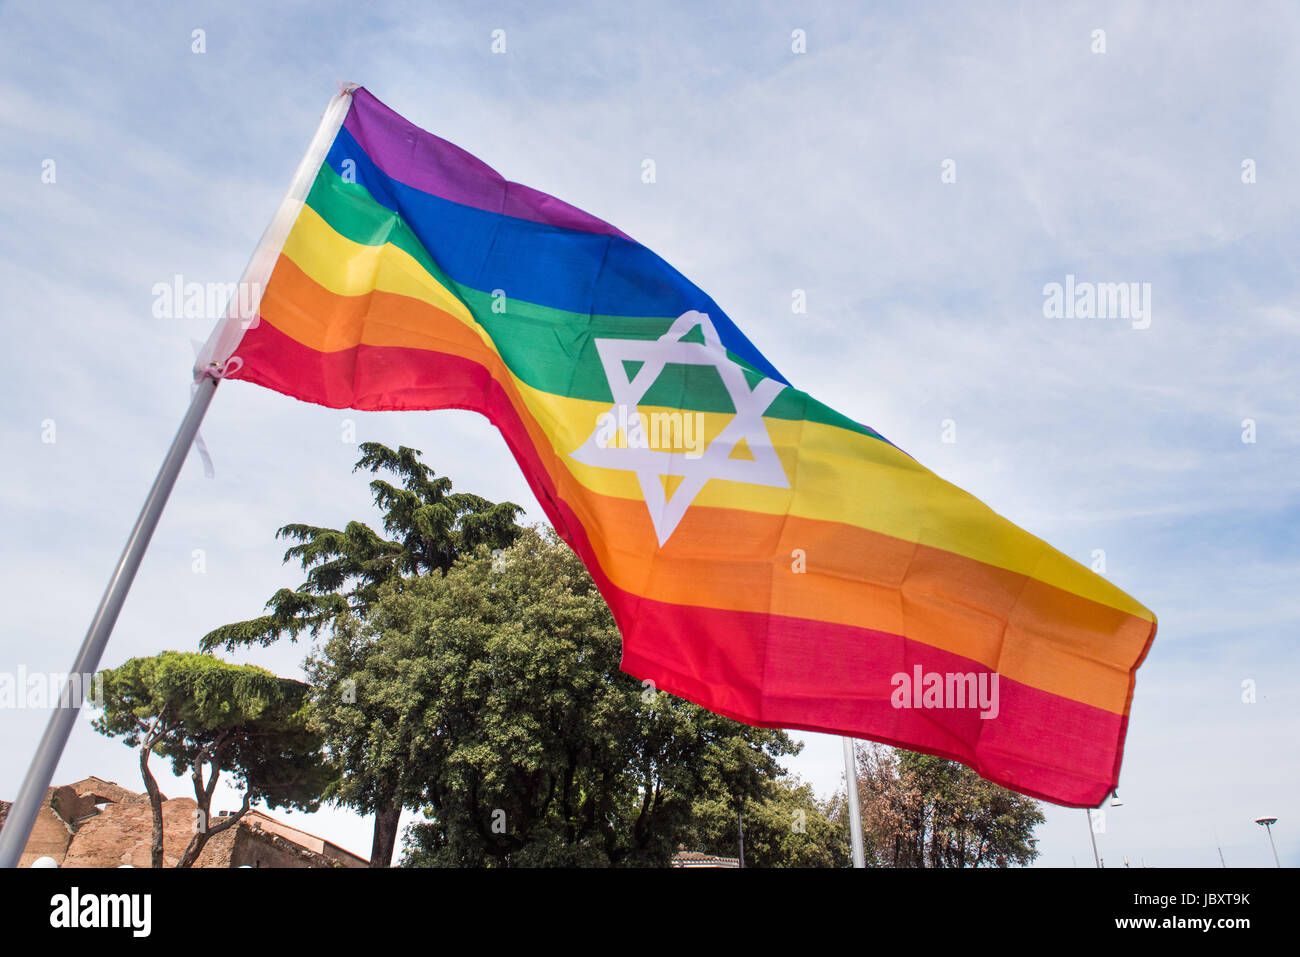 Colorful rainbow peace flag with star of david hexagon symbol over sky Stock Photo